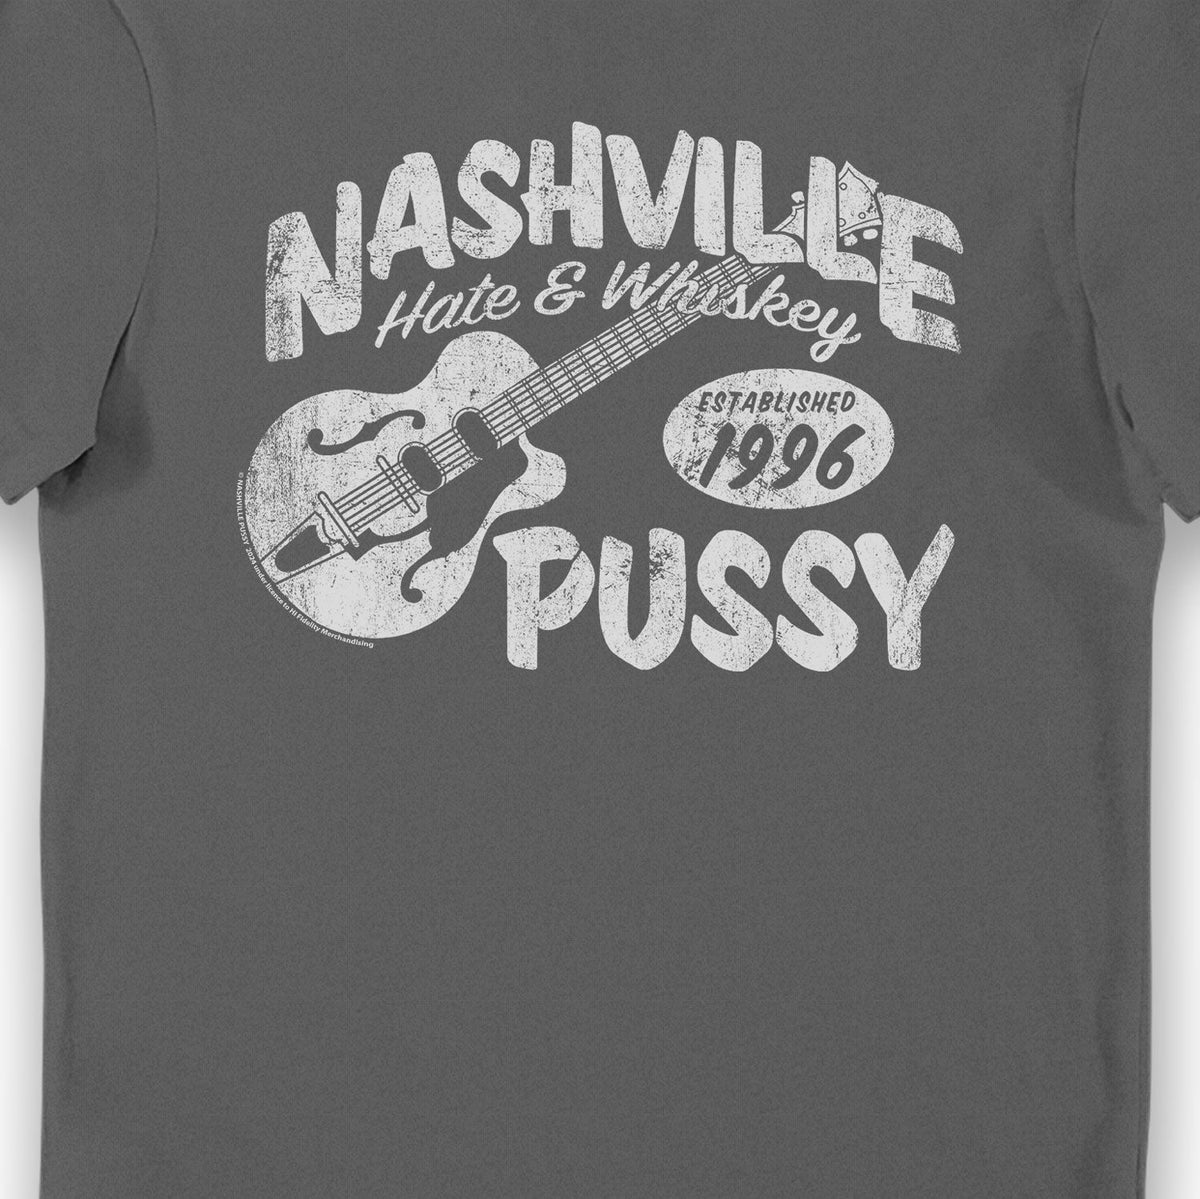 Nashville Pussy Hate & Whiskey Adults Overdye Black Oyster T-Shirt